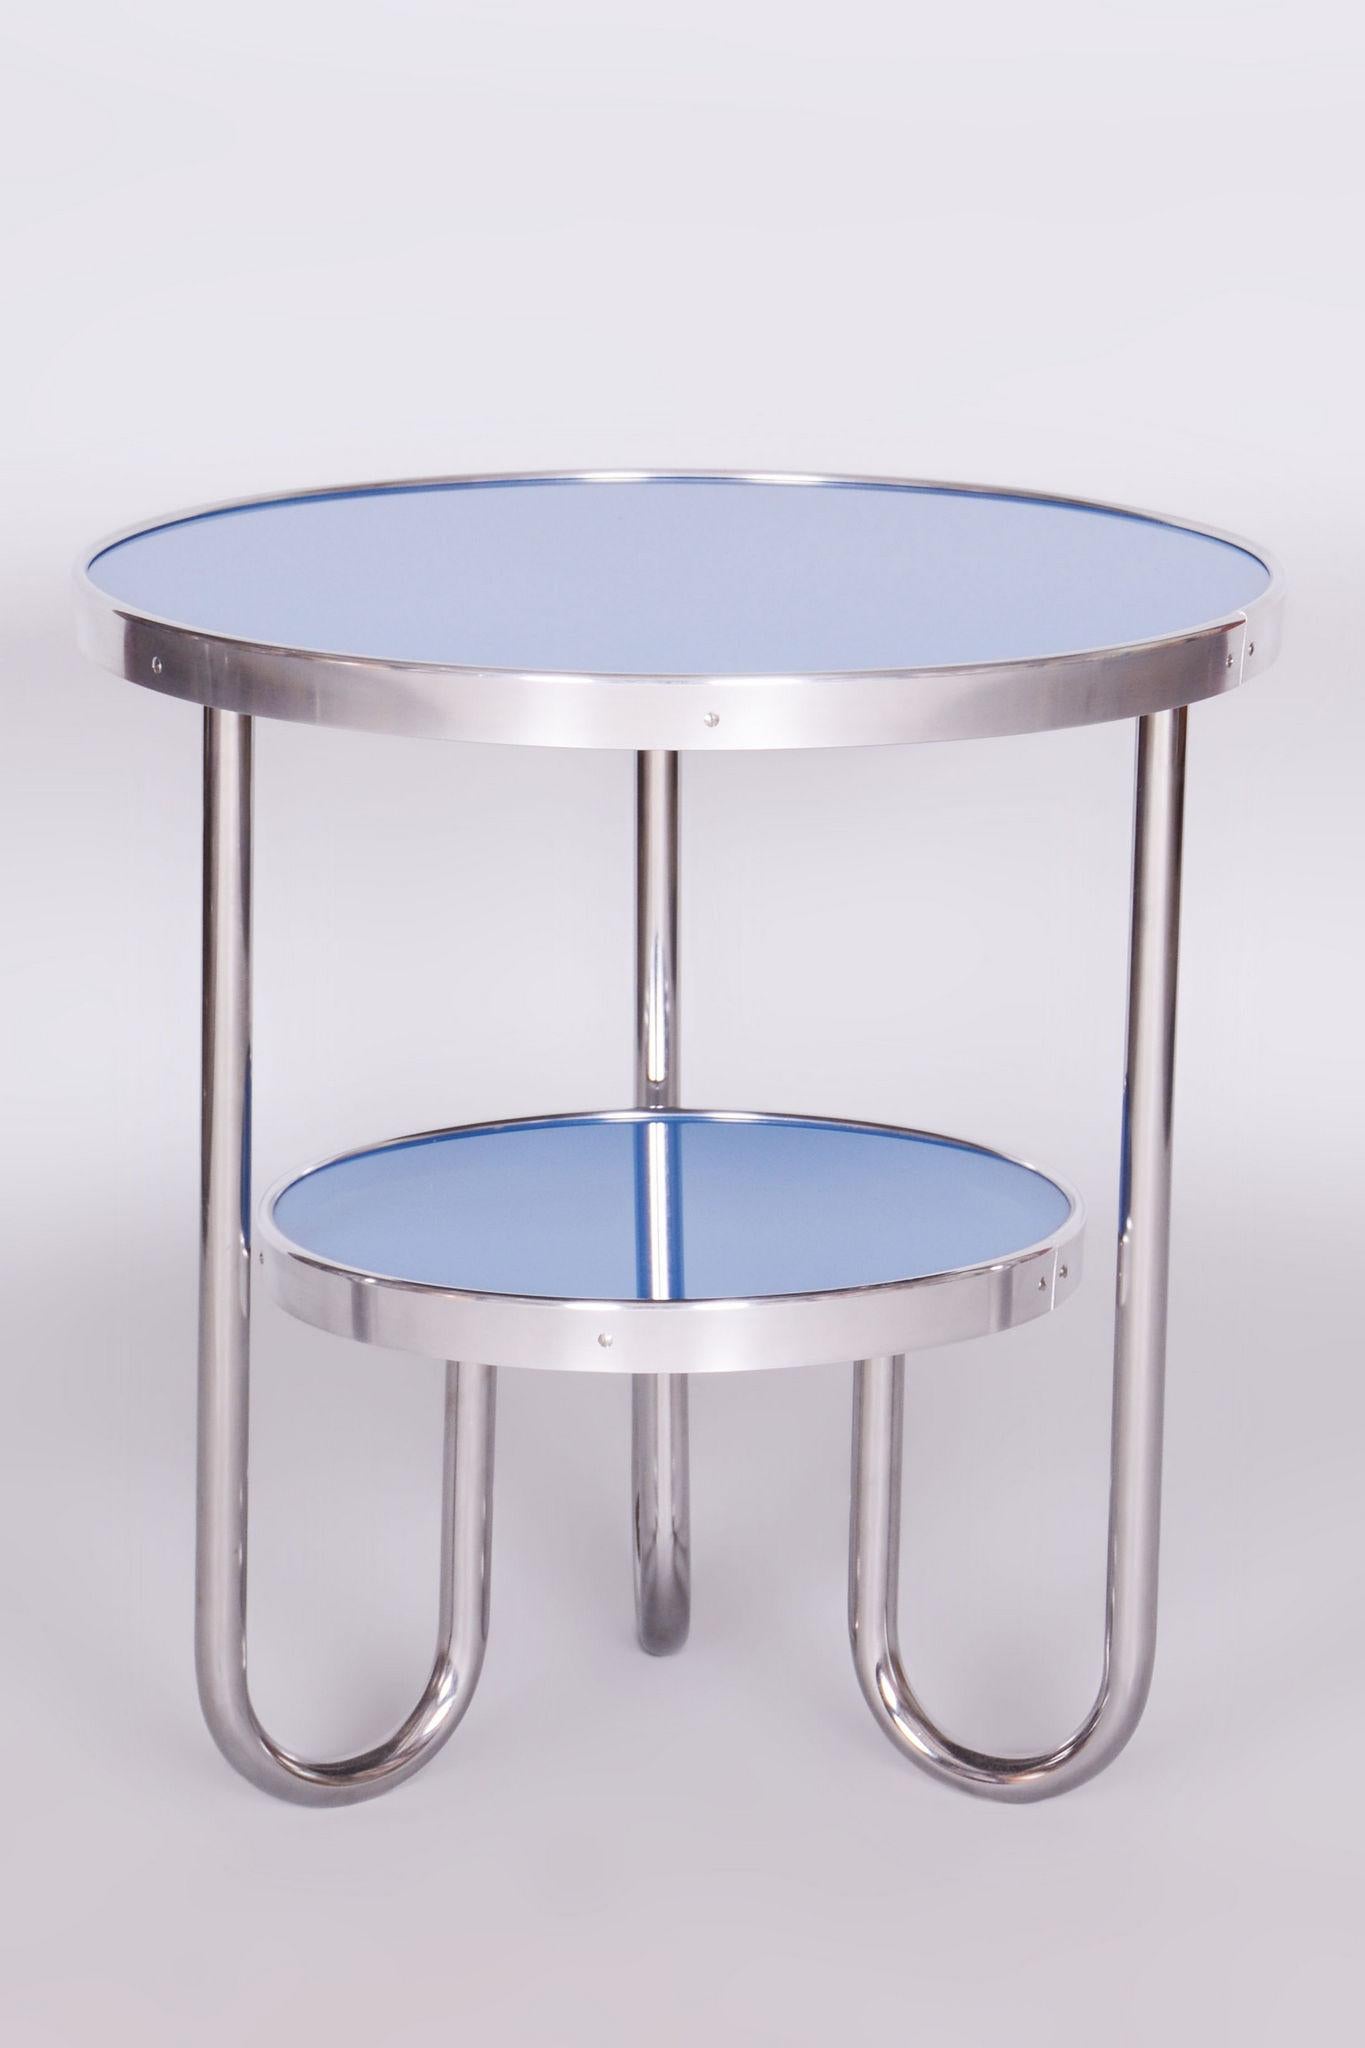 Restored Bauhaus Small Blue Table, Kovona, Chrome, Czechia, 1930s For Sale 3